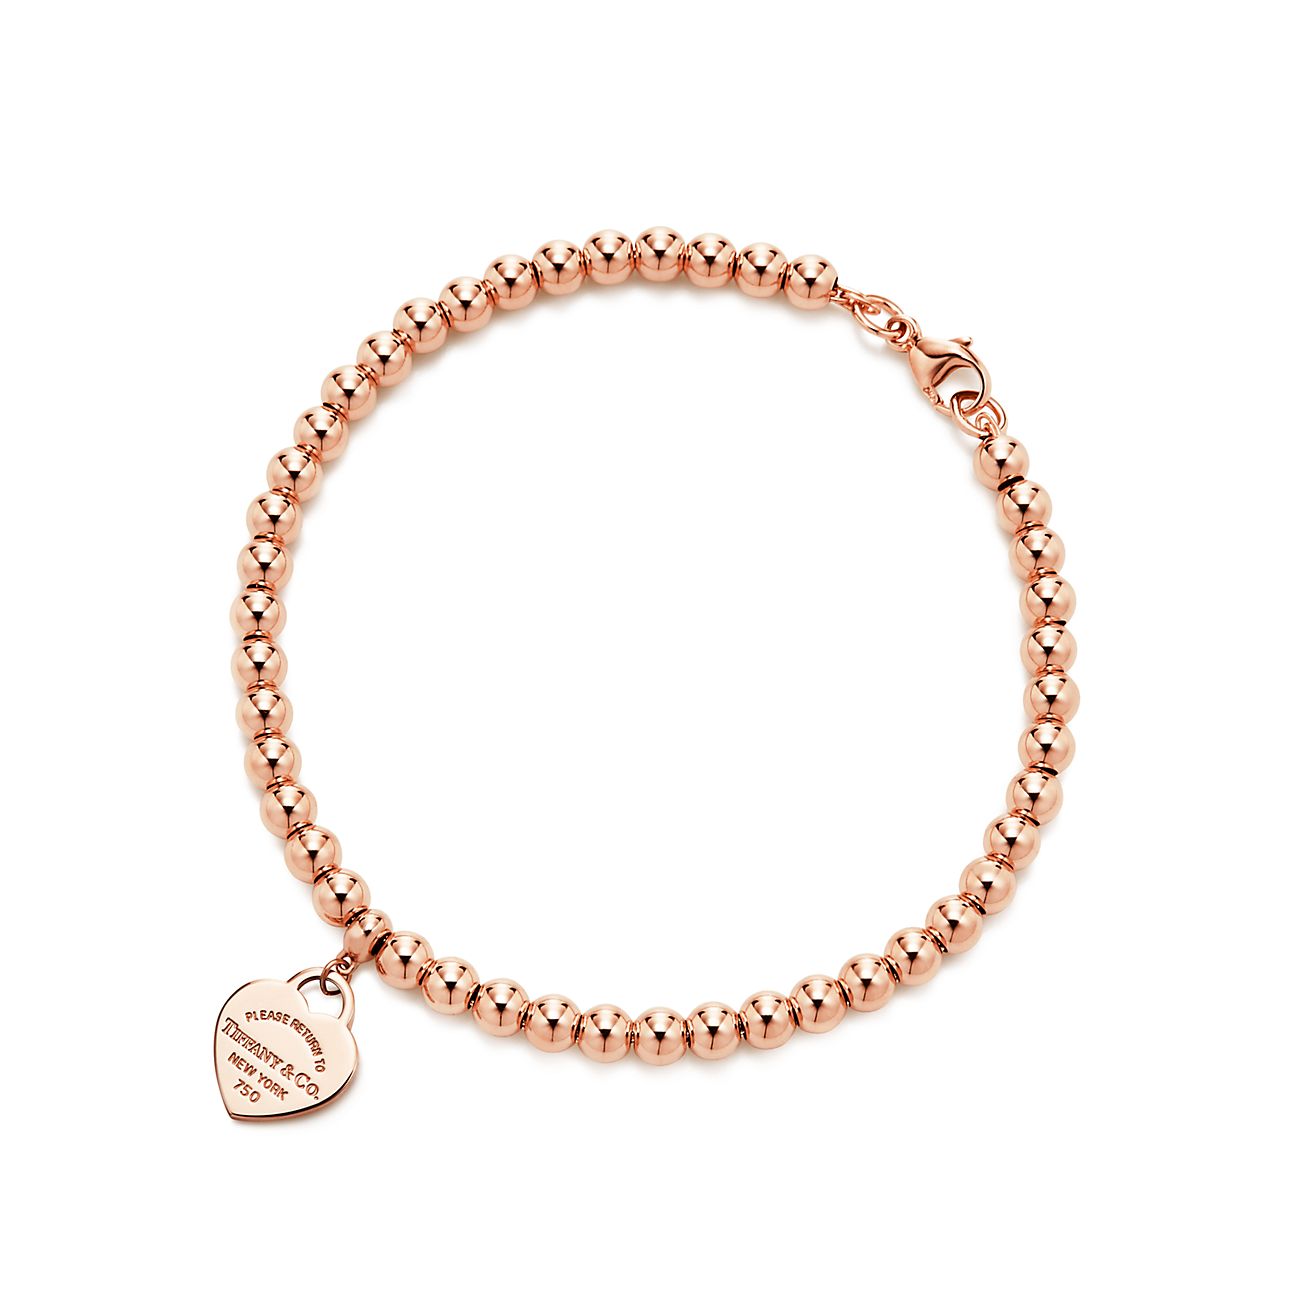 tiffany bead bracelet rose gold heart